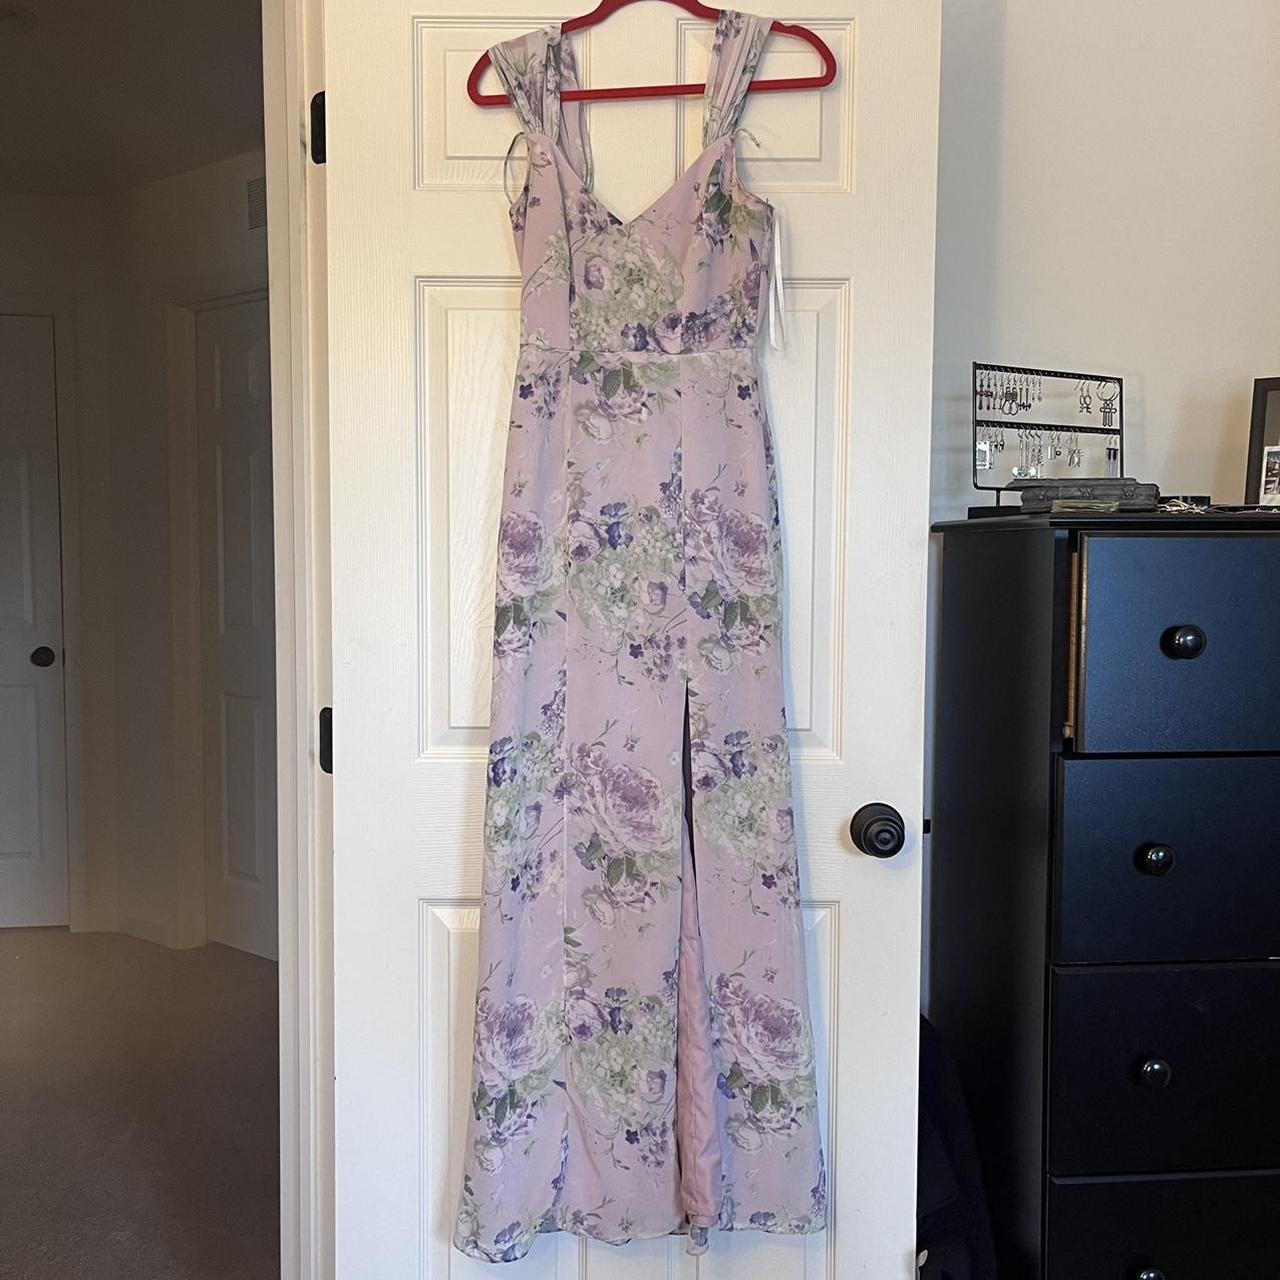 Product Image 1 - Floral lavender brides maid dress.